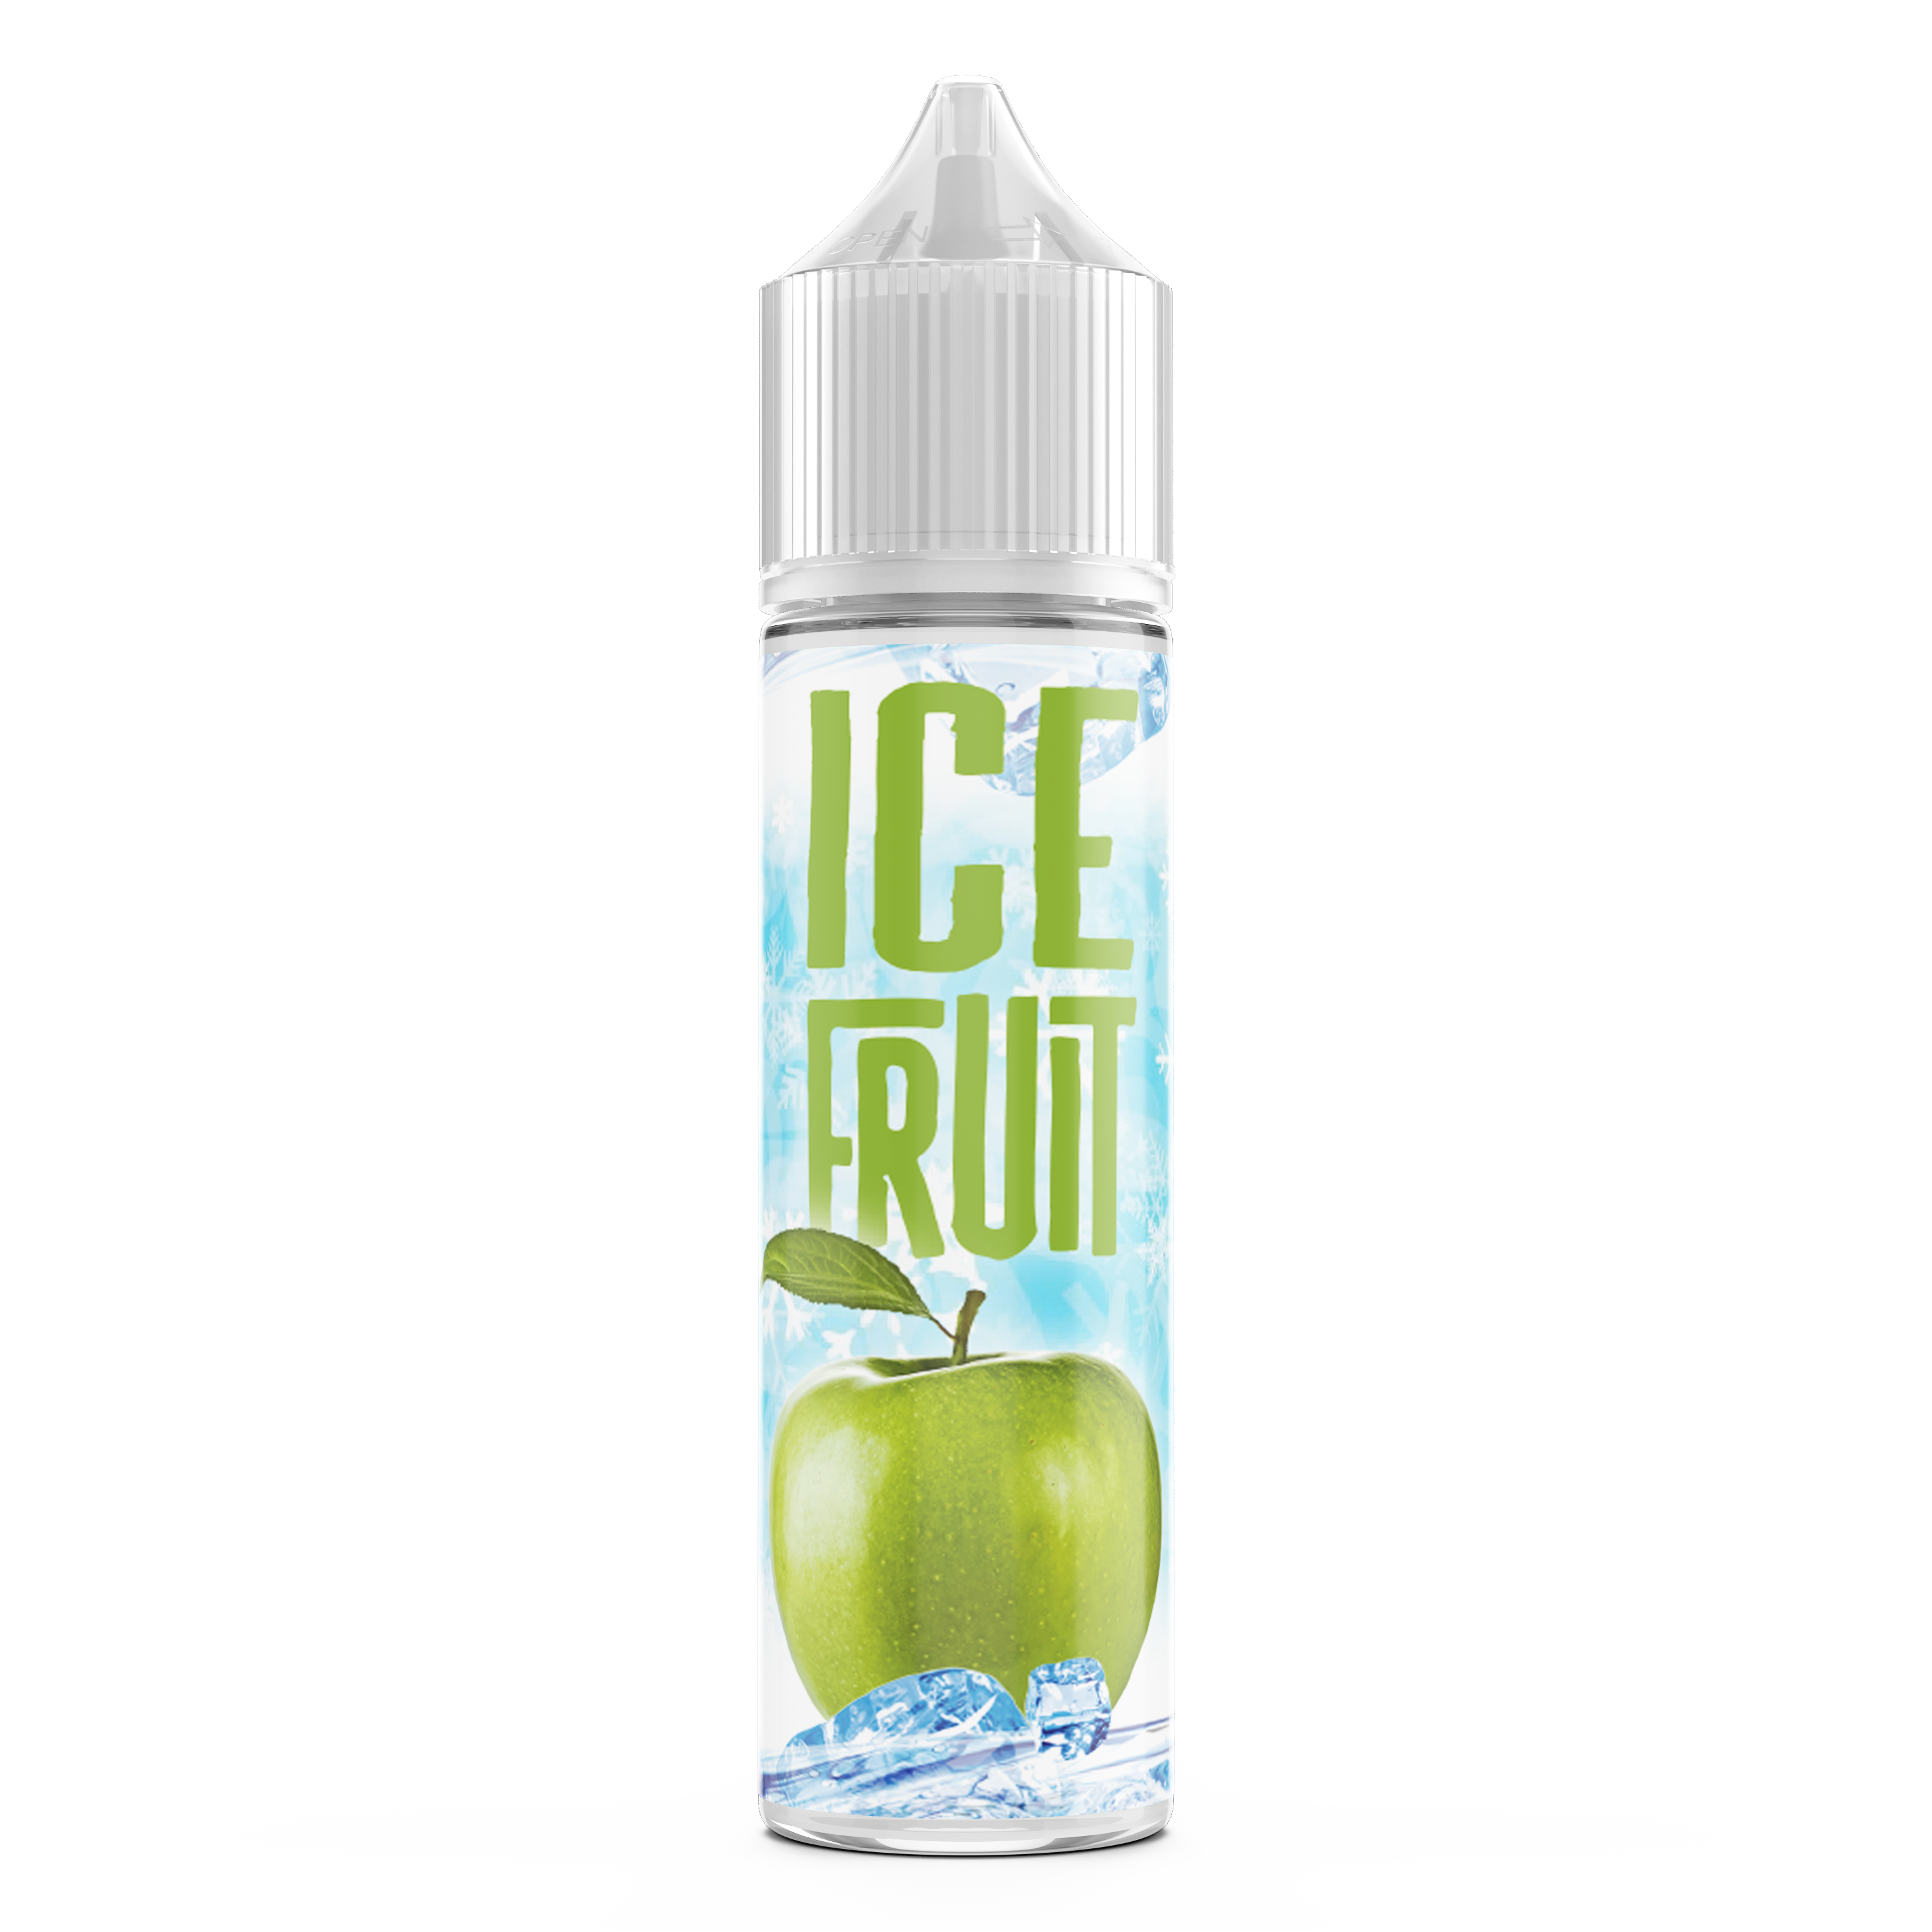 ICE FRUIT Groene Appel Short Fill - Flavormonks